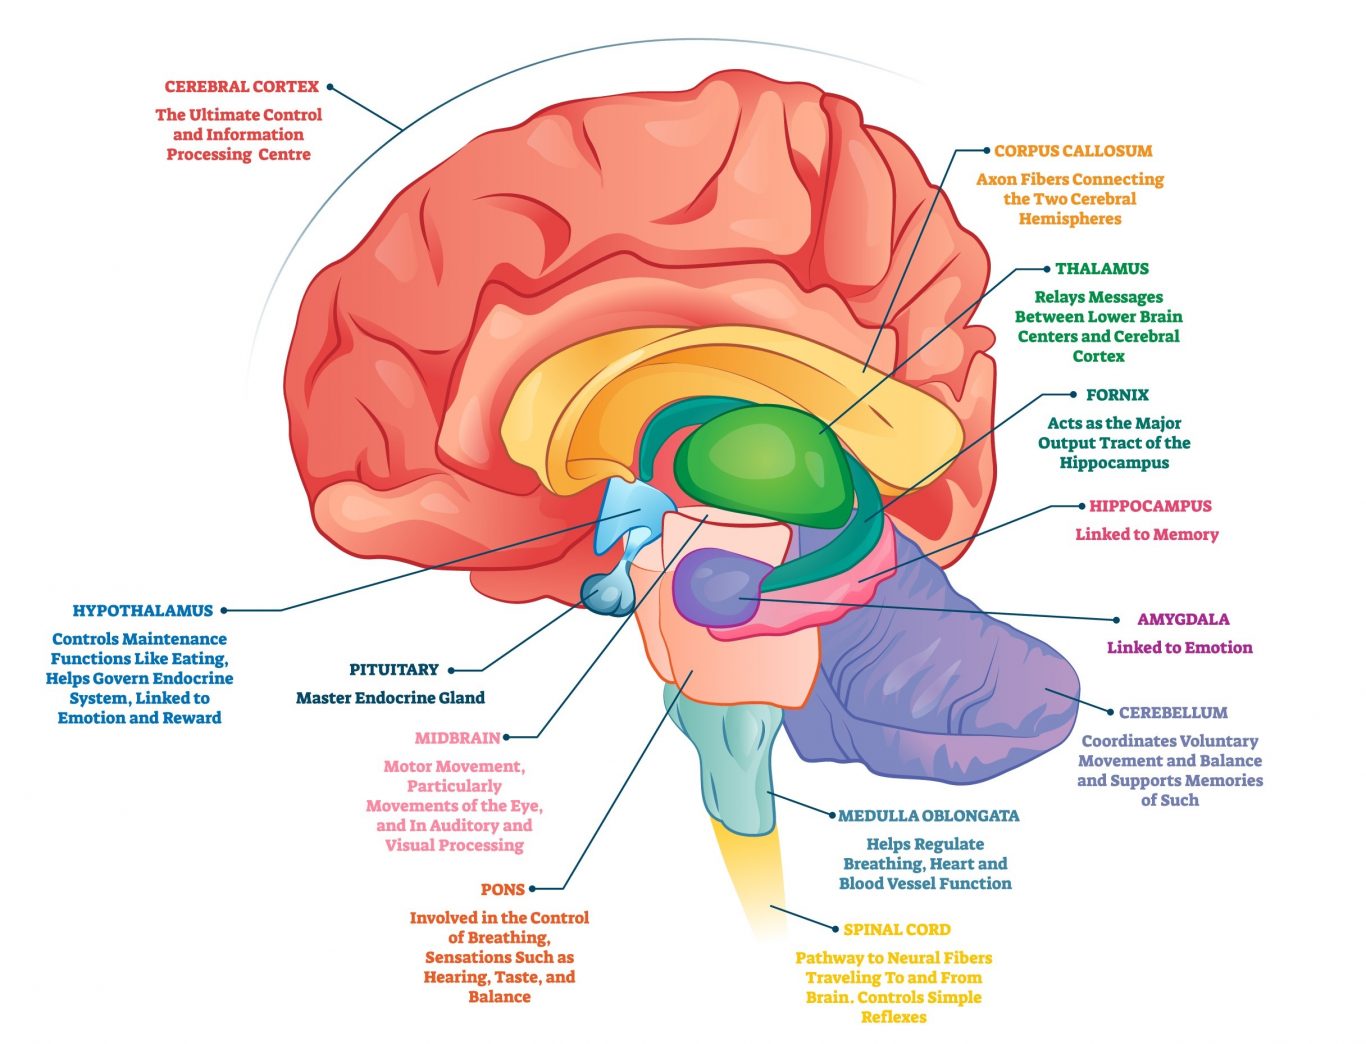 neuroscience and brain function